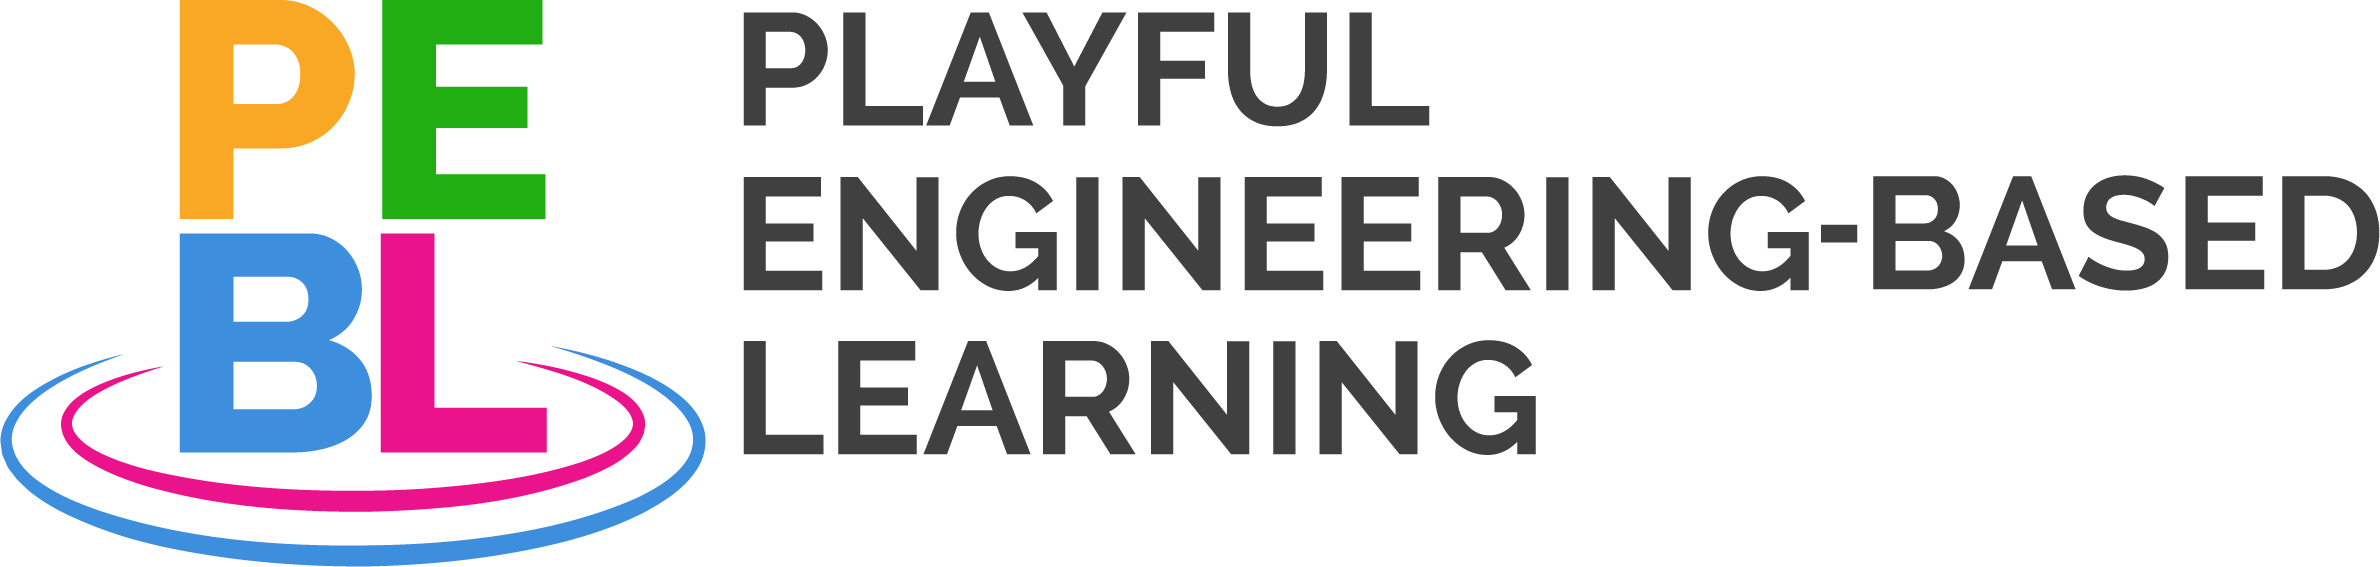 Playful Engineering-Based Learning